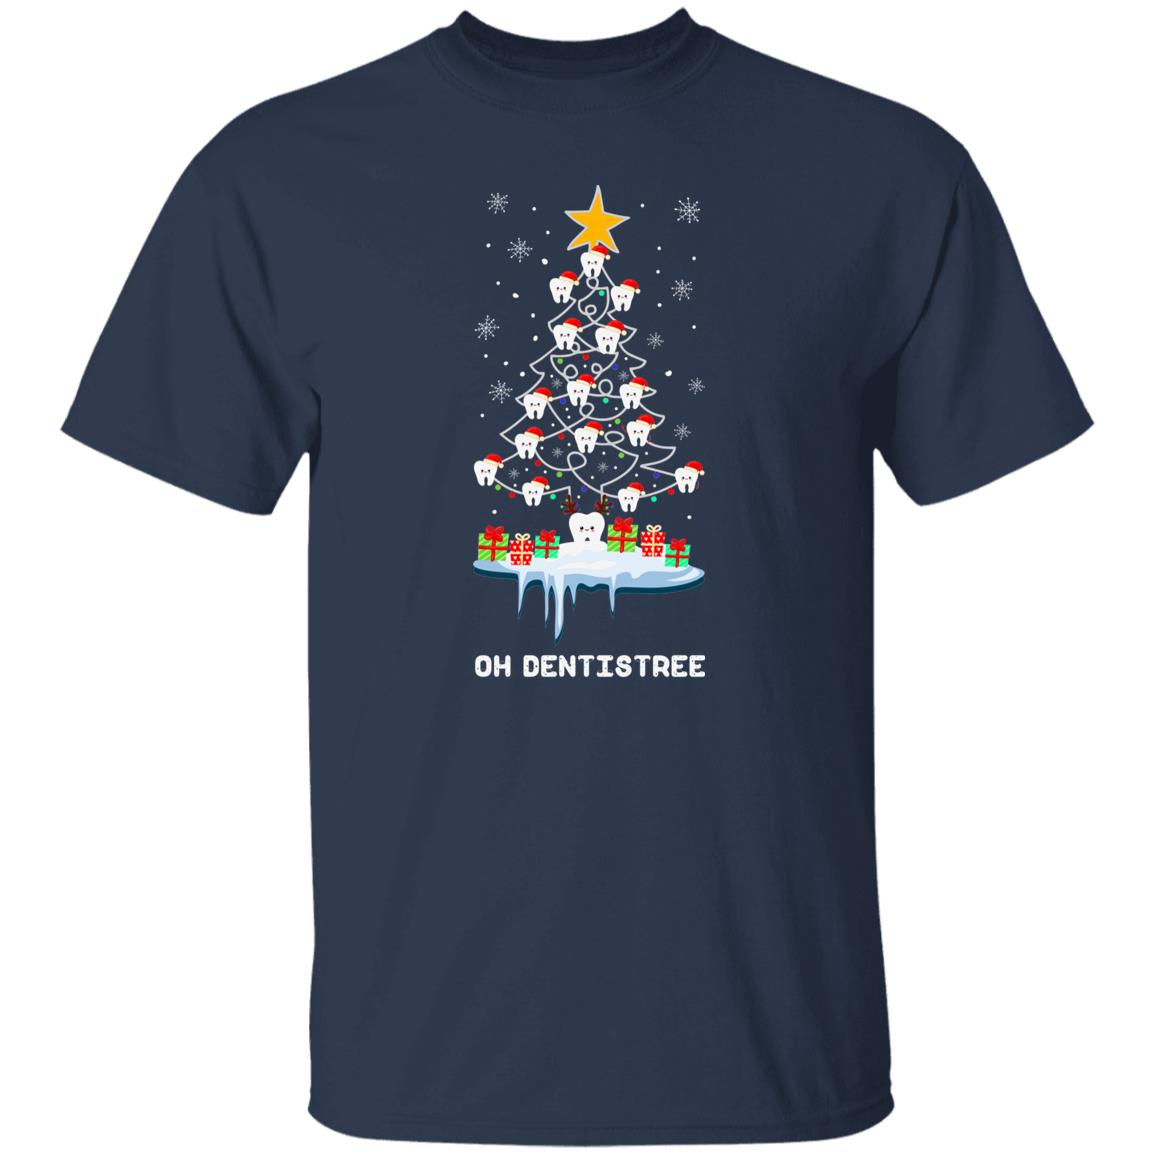 Dentisttree Christmas Tree Funny Dental Gift Shirt